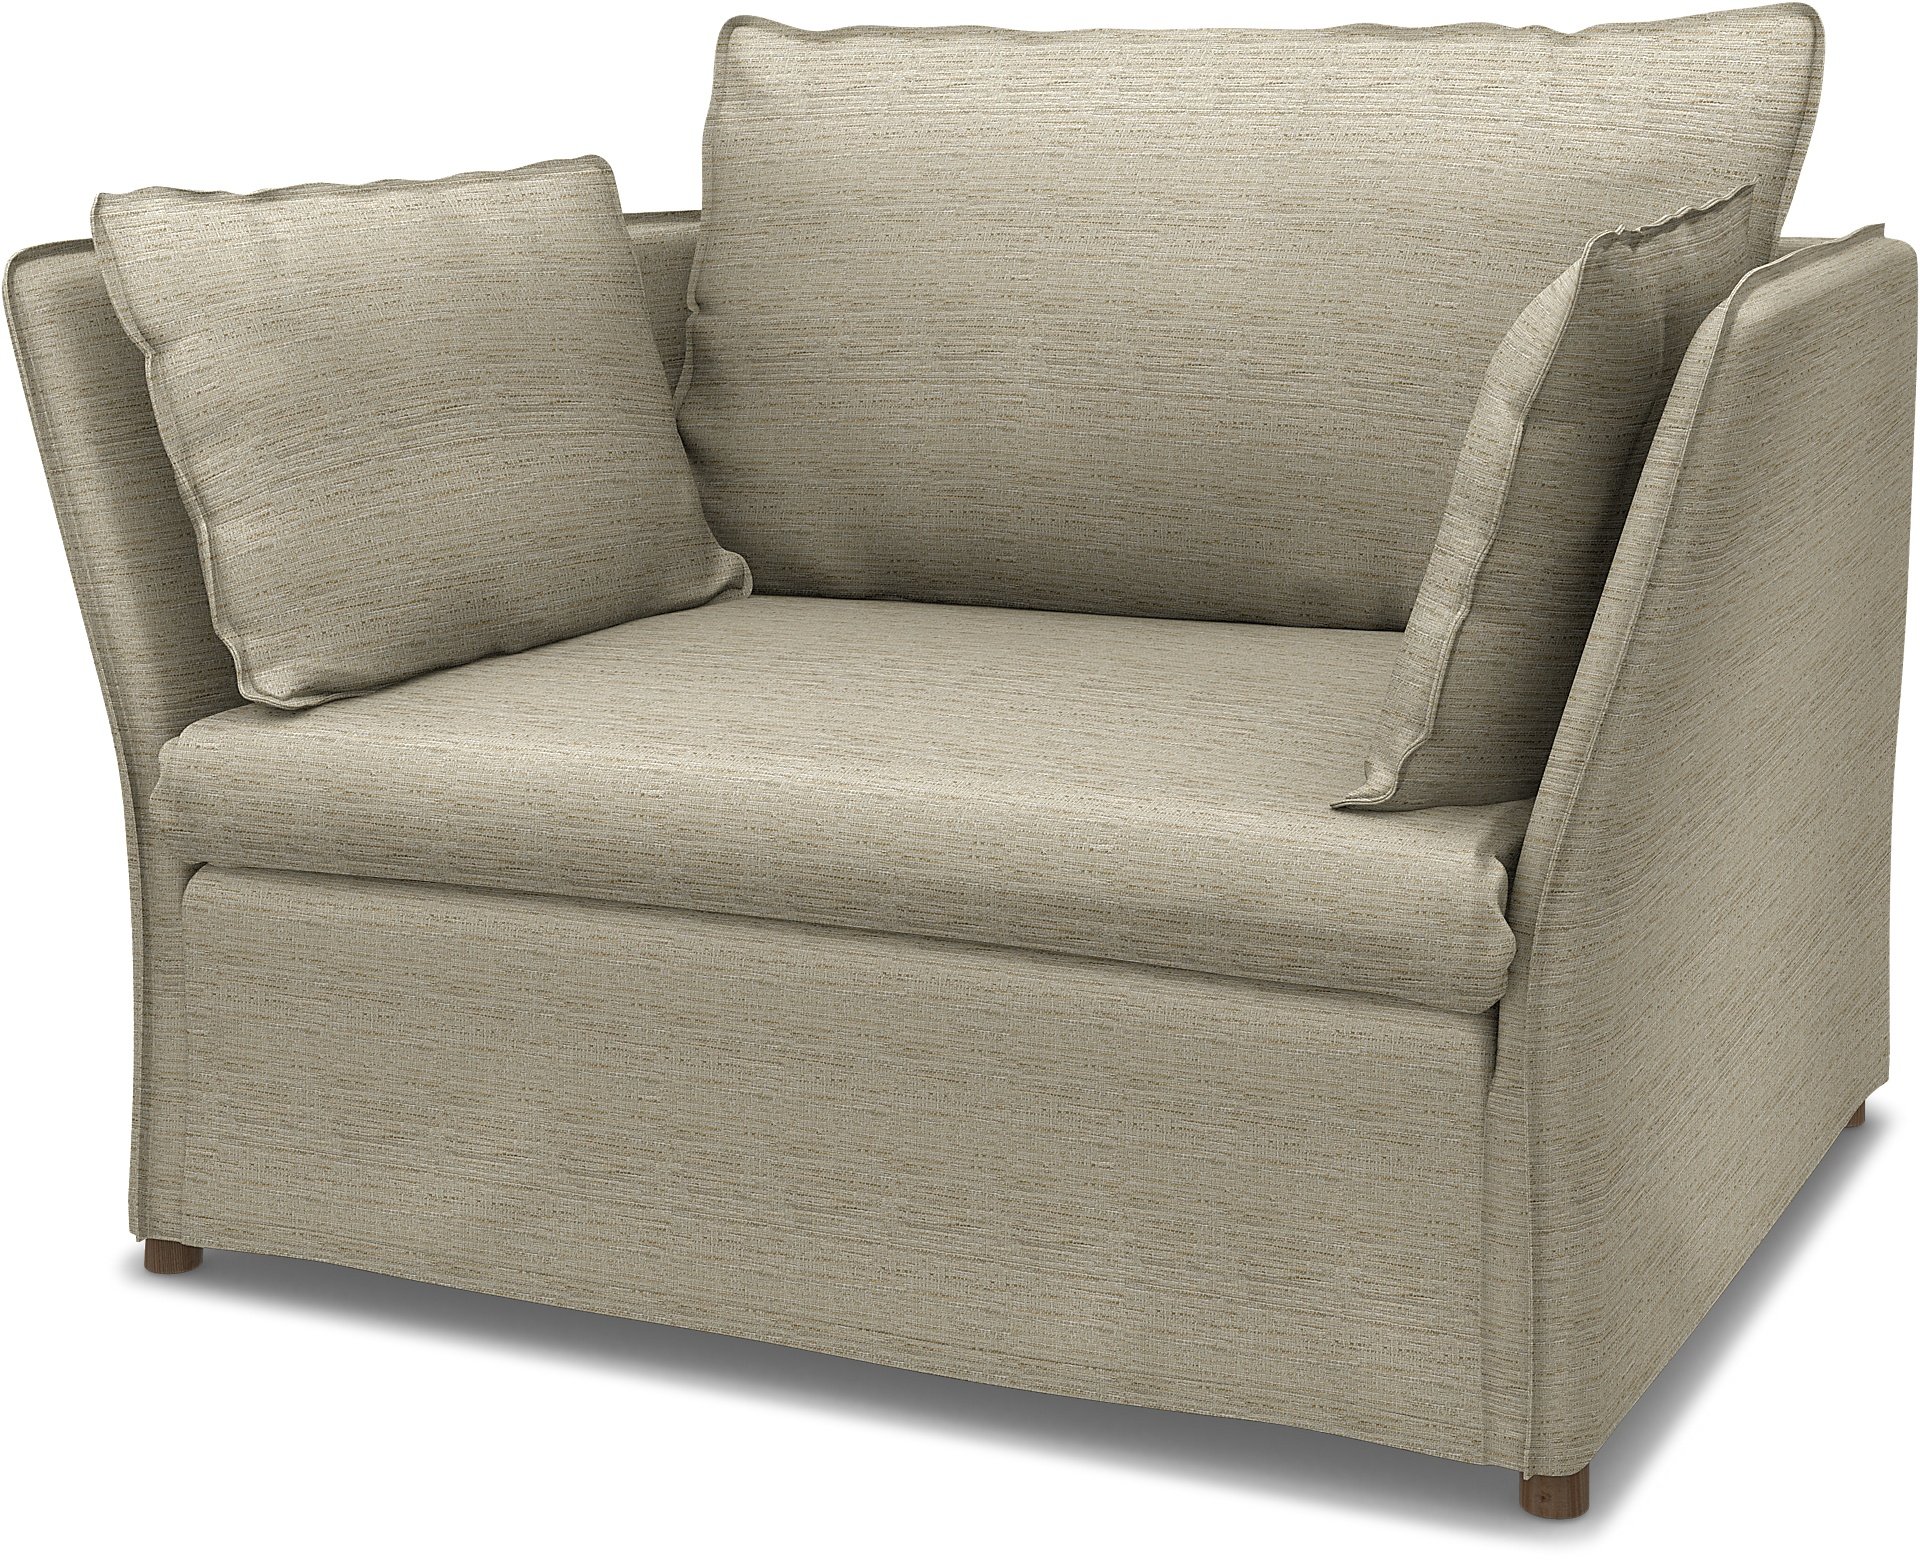 IKEA - Backsalen 1,5 seater sofa, Light Sand, Boucle & Texture - Bemz